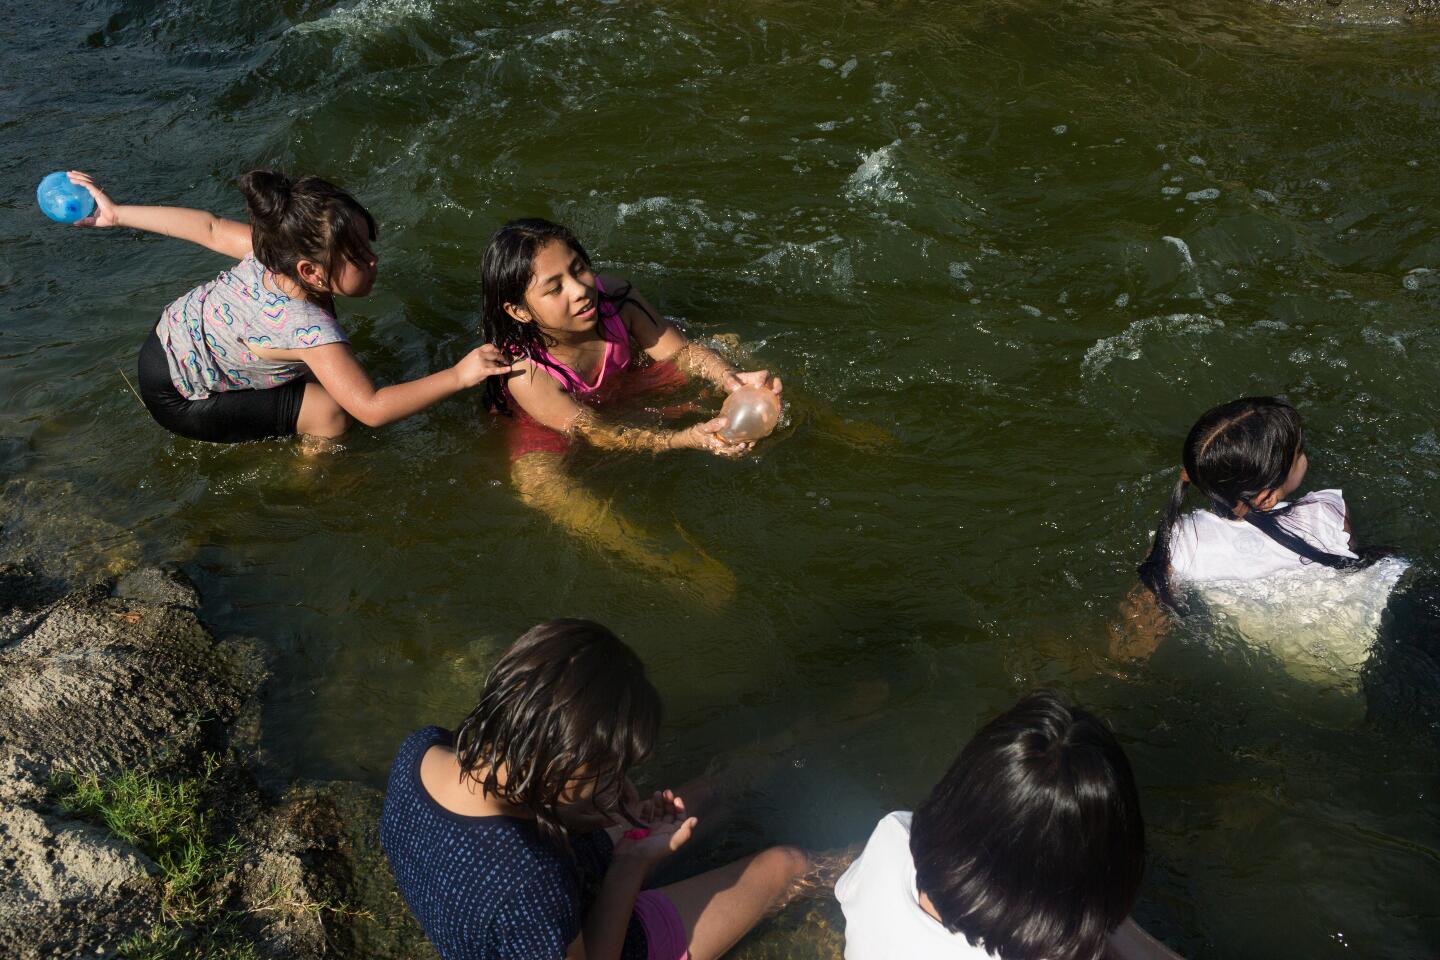 Girls play in a stream near Lake Balboa/Anthony C. Beilenson Park on Sunday.